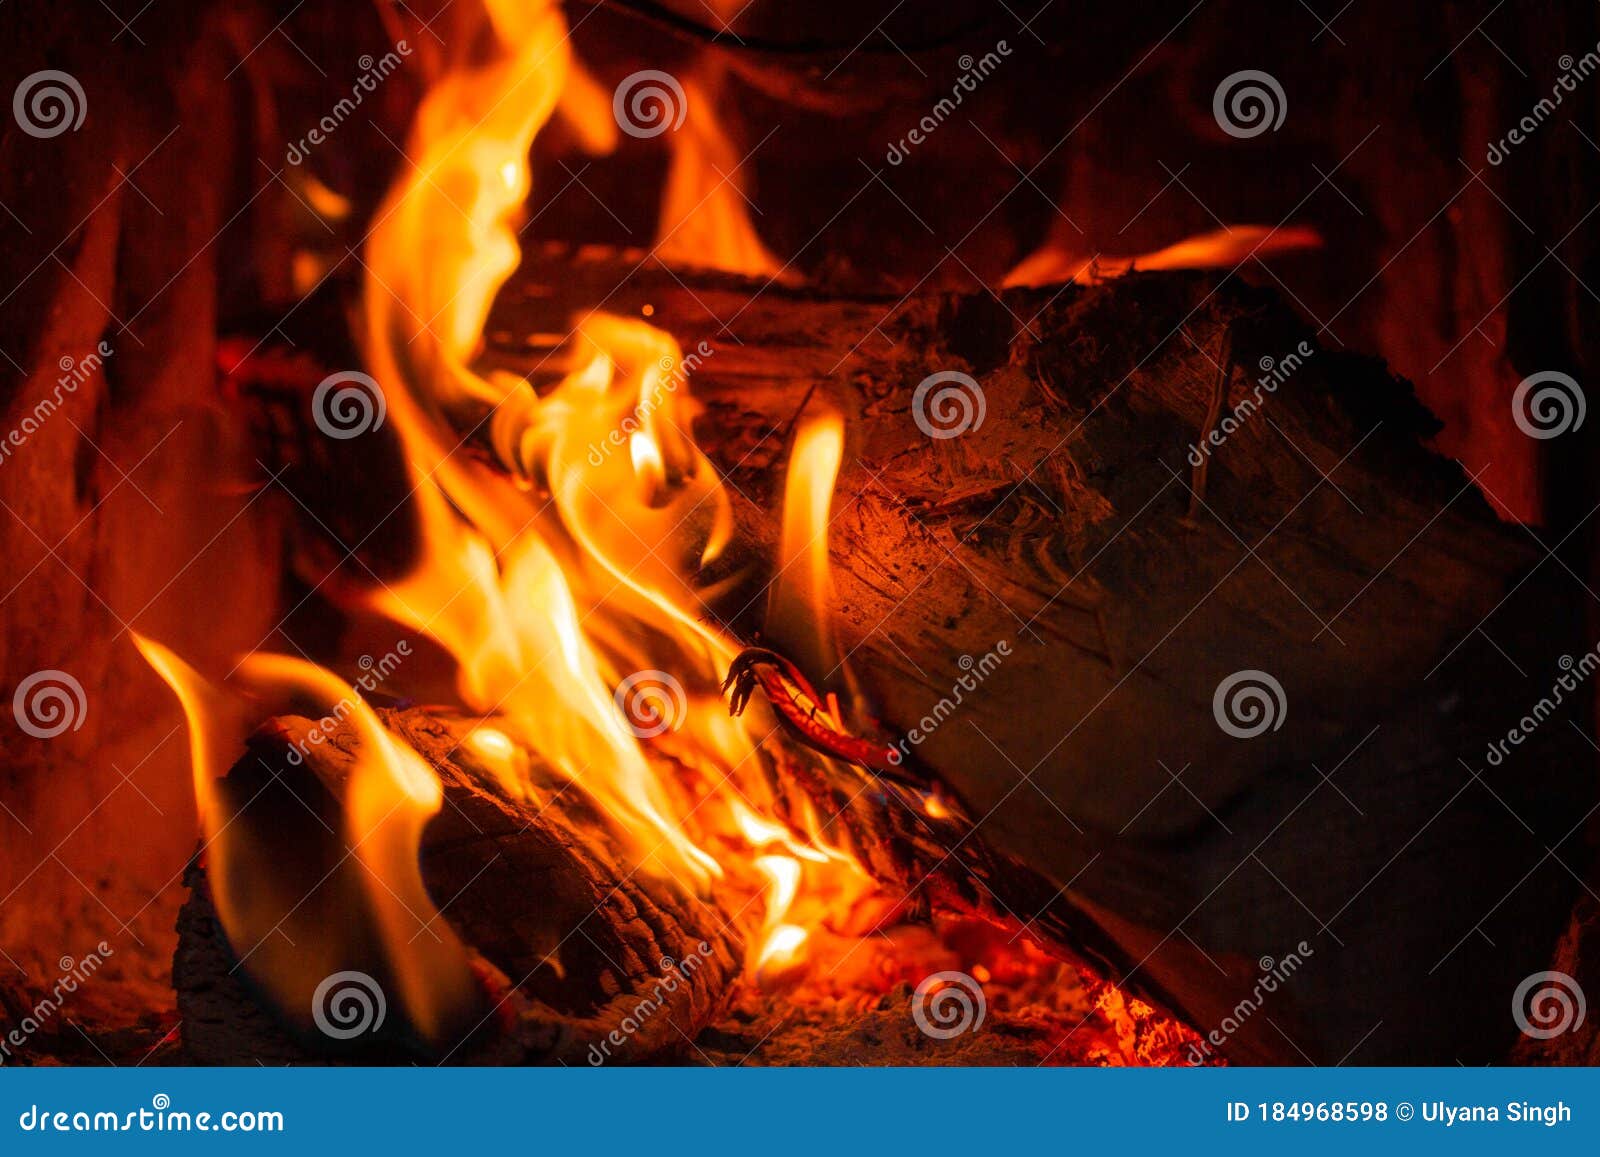 wood log burning in the chimenea. fire wood, coal and amber ash closeup.